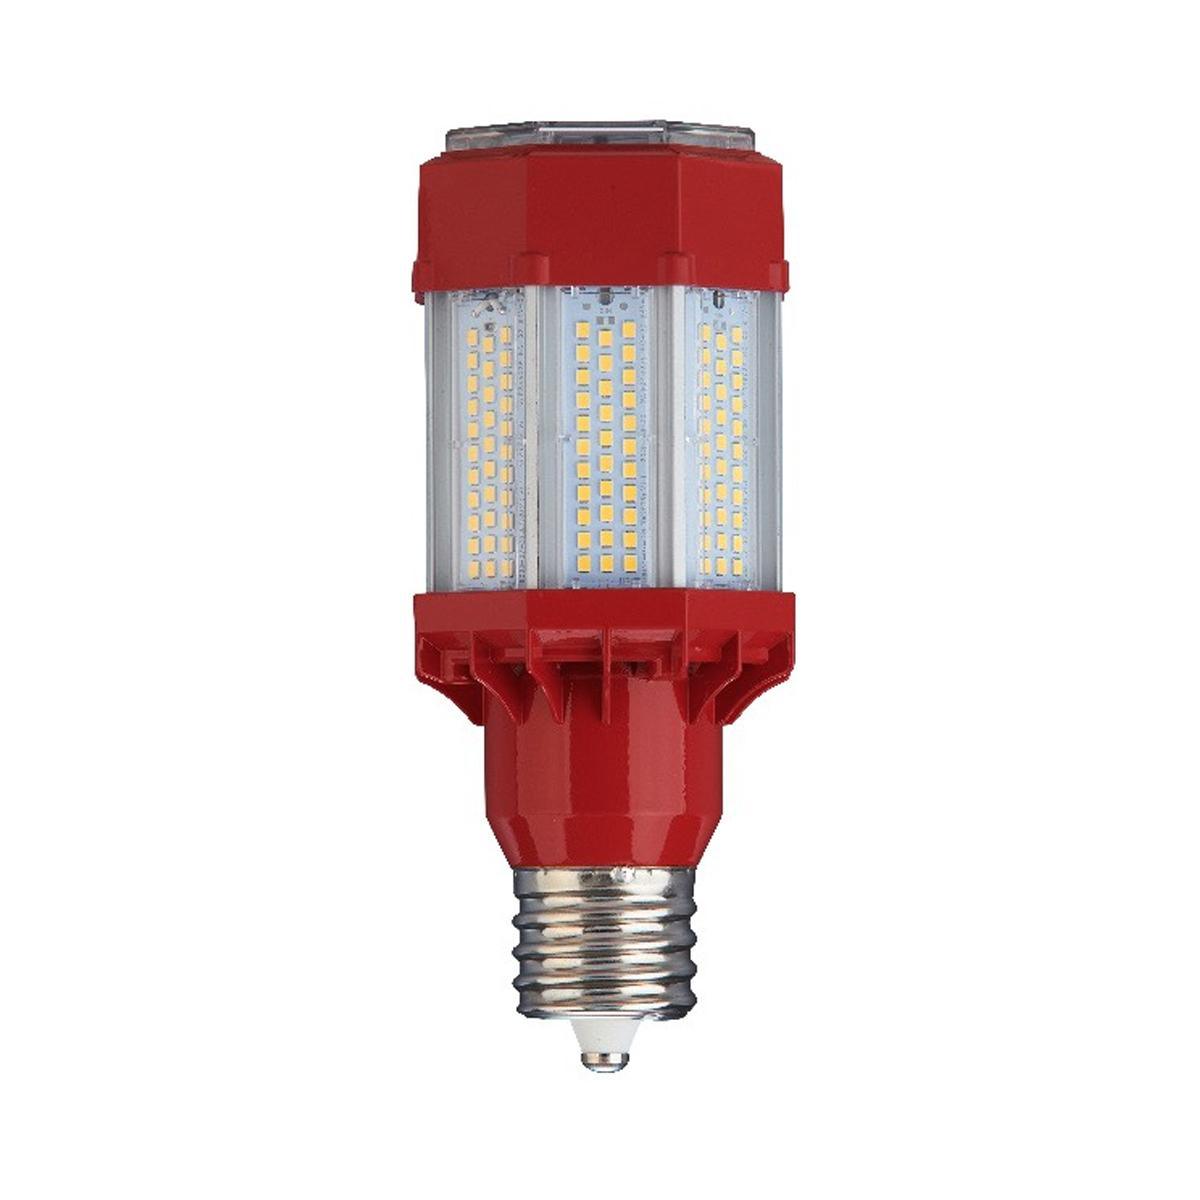 LED Corn Retrofit Lamp, 45W, 6620 Lumens, 5000K, EX39 Mogul Extended Mogul Base, 120-277V - Bees Lighting